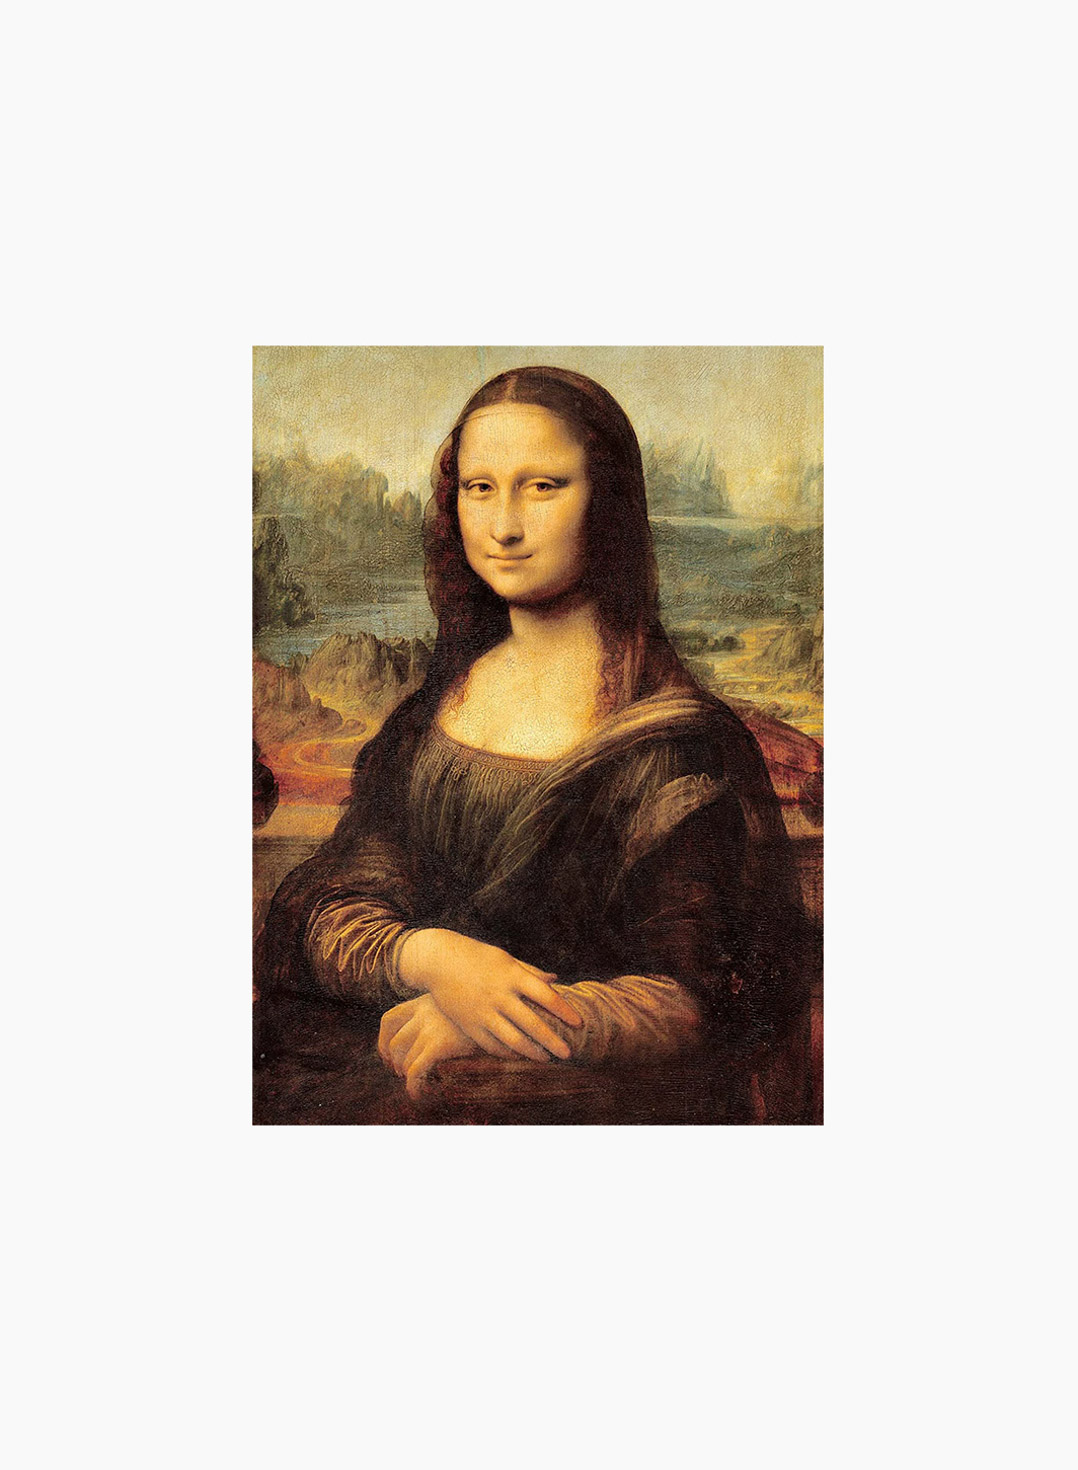 Ravensburger Puzzle Leonardo da Vinci - Mona Lisa 300p